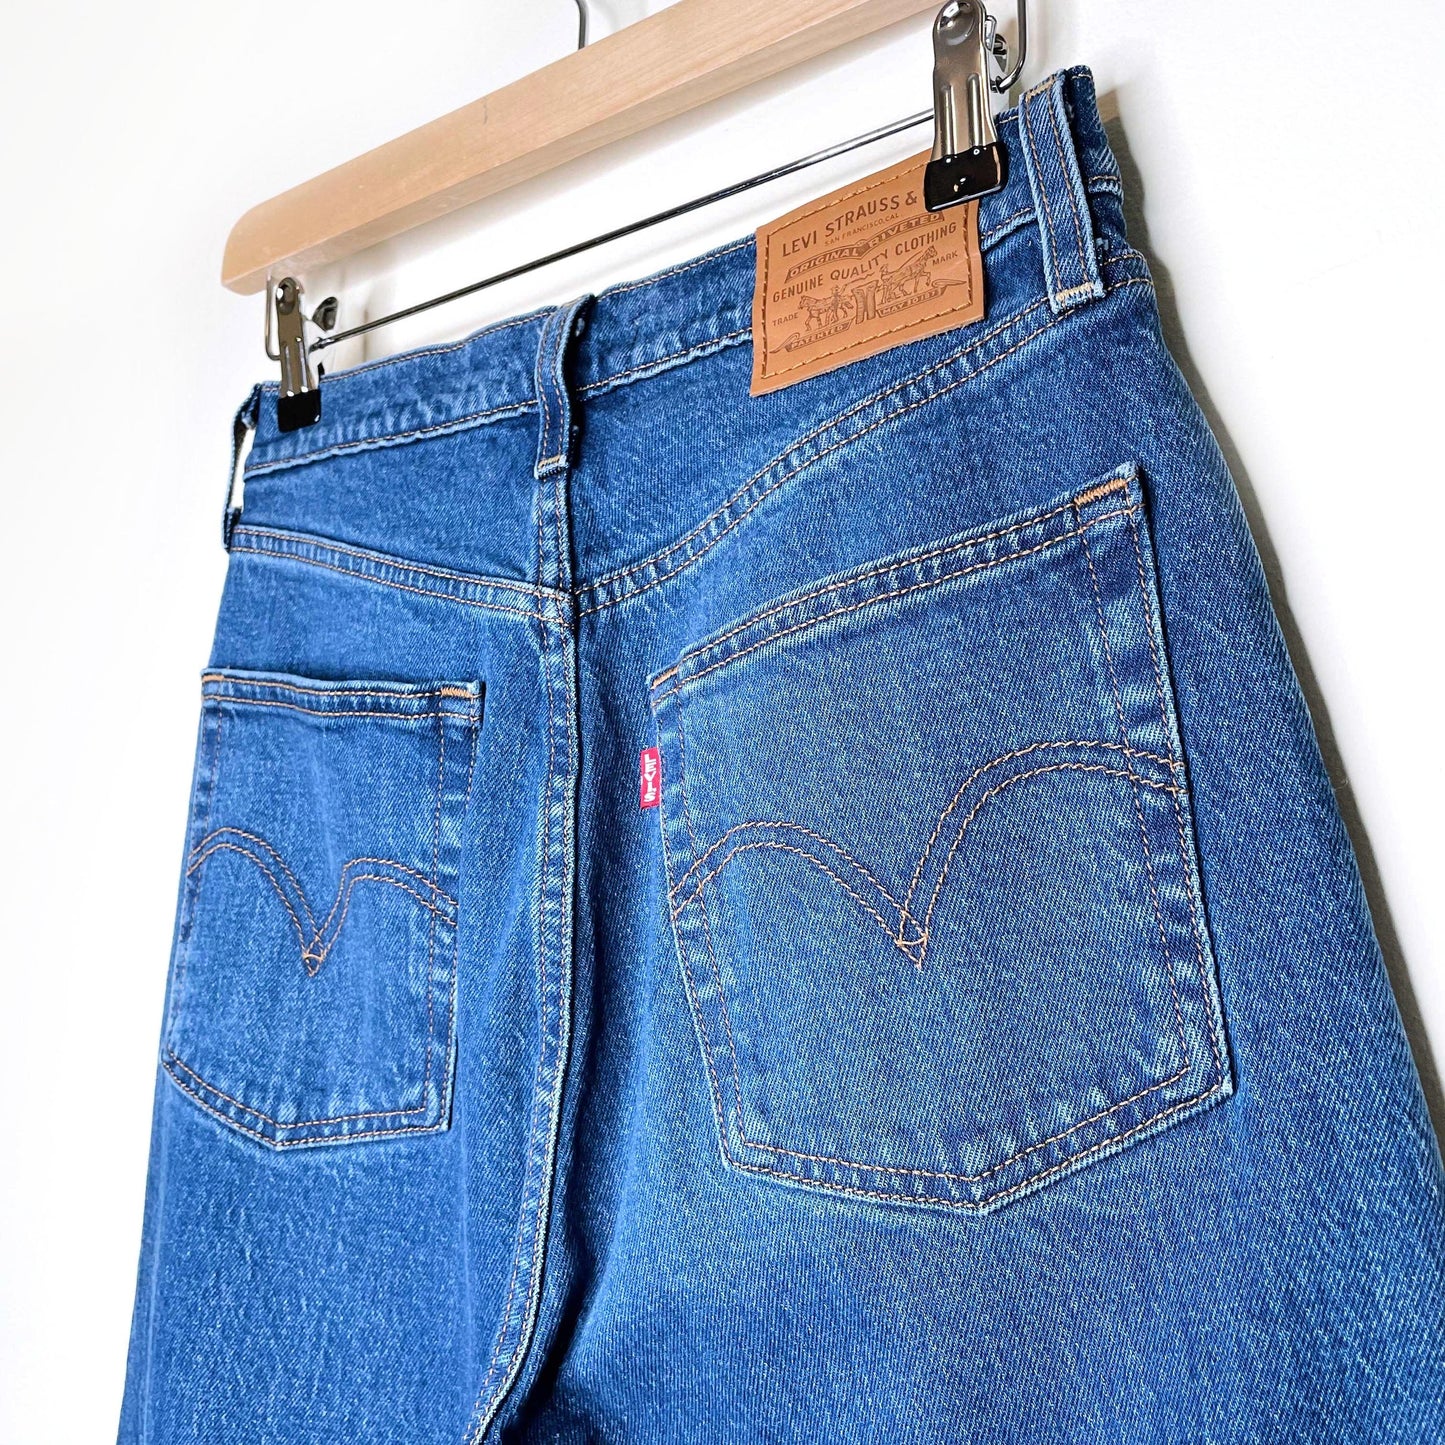 nwot levi's aritzia ribcage straight jeans - size 27